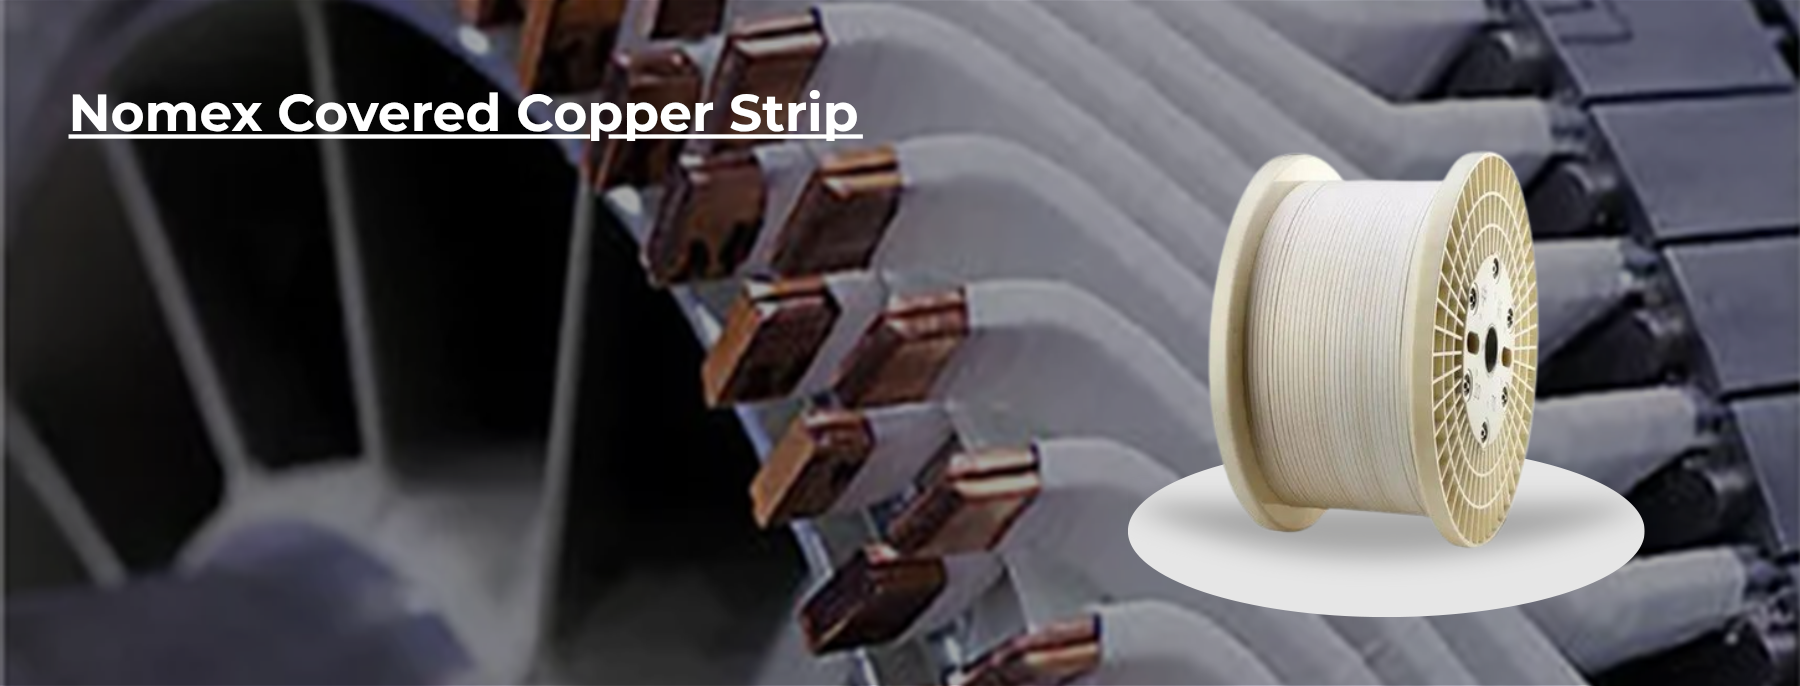 Nomex Covered Copper Strip